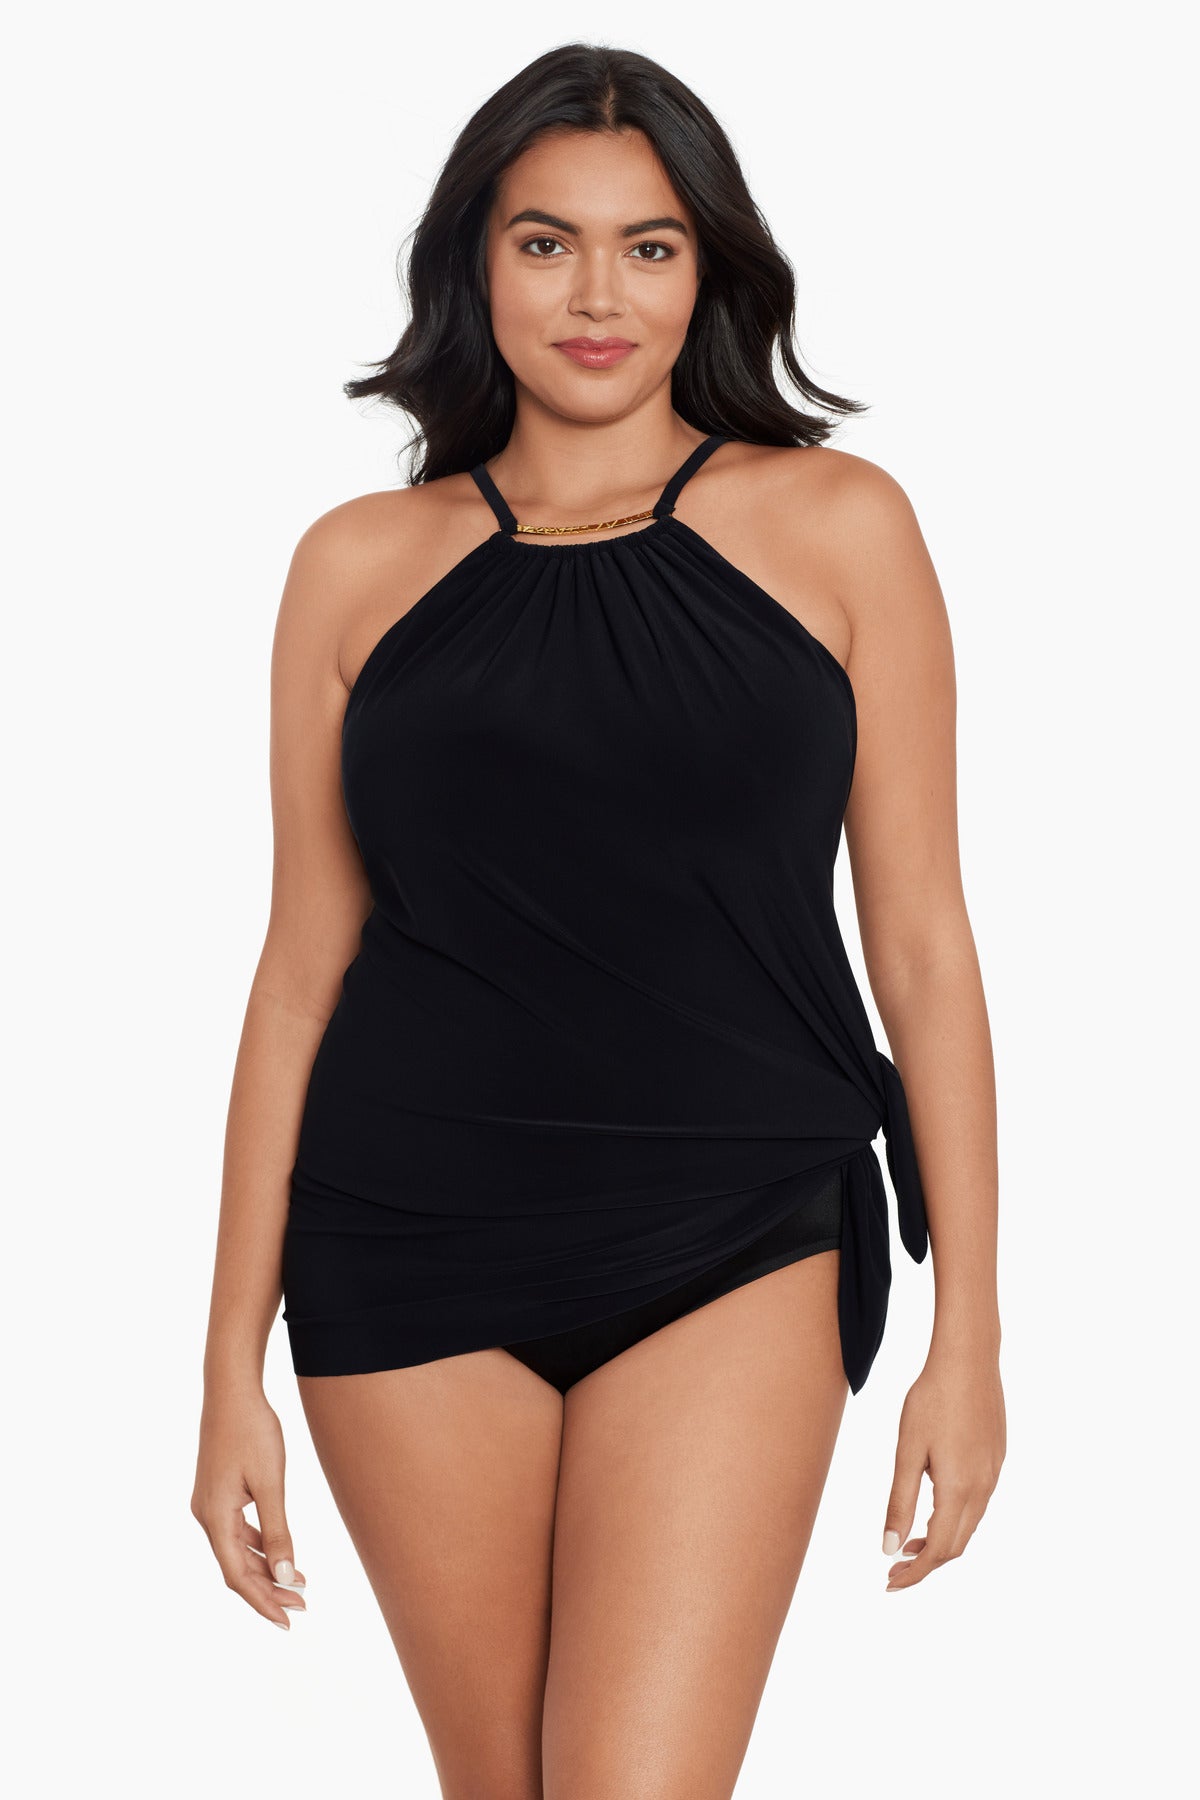 Swimsuits For All Women's Plus Size Bandeau Blouson Tankini Top 18 Black 